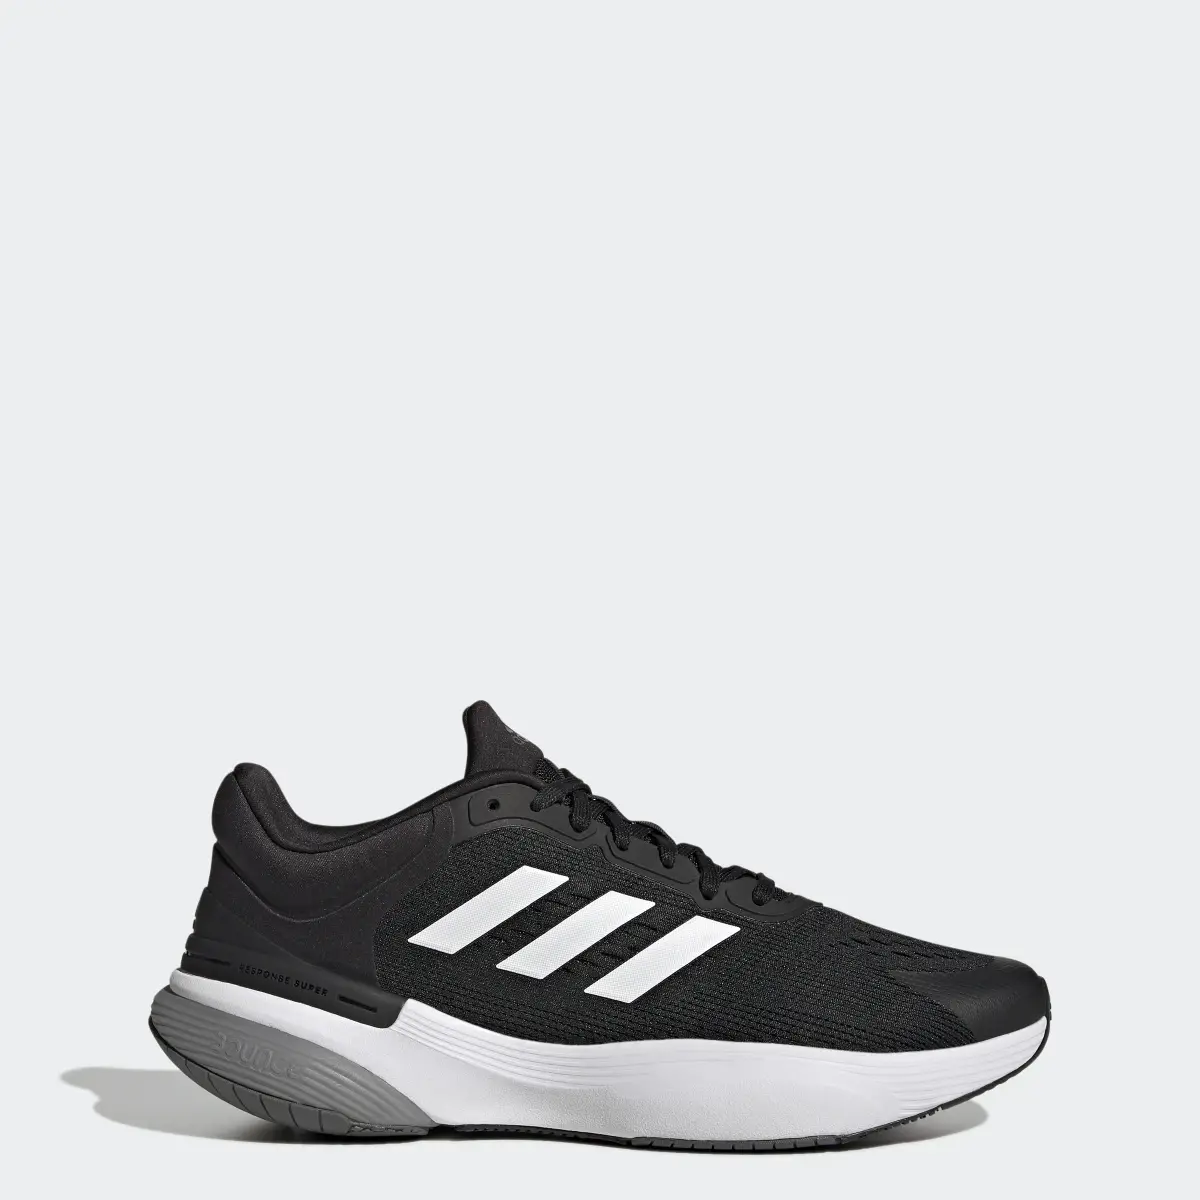 Adidas Response Super 3.0 Running Shoes. 1